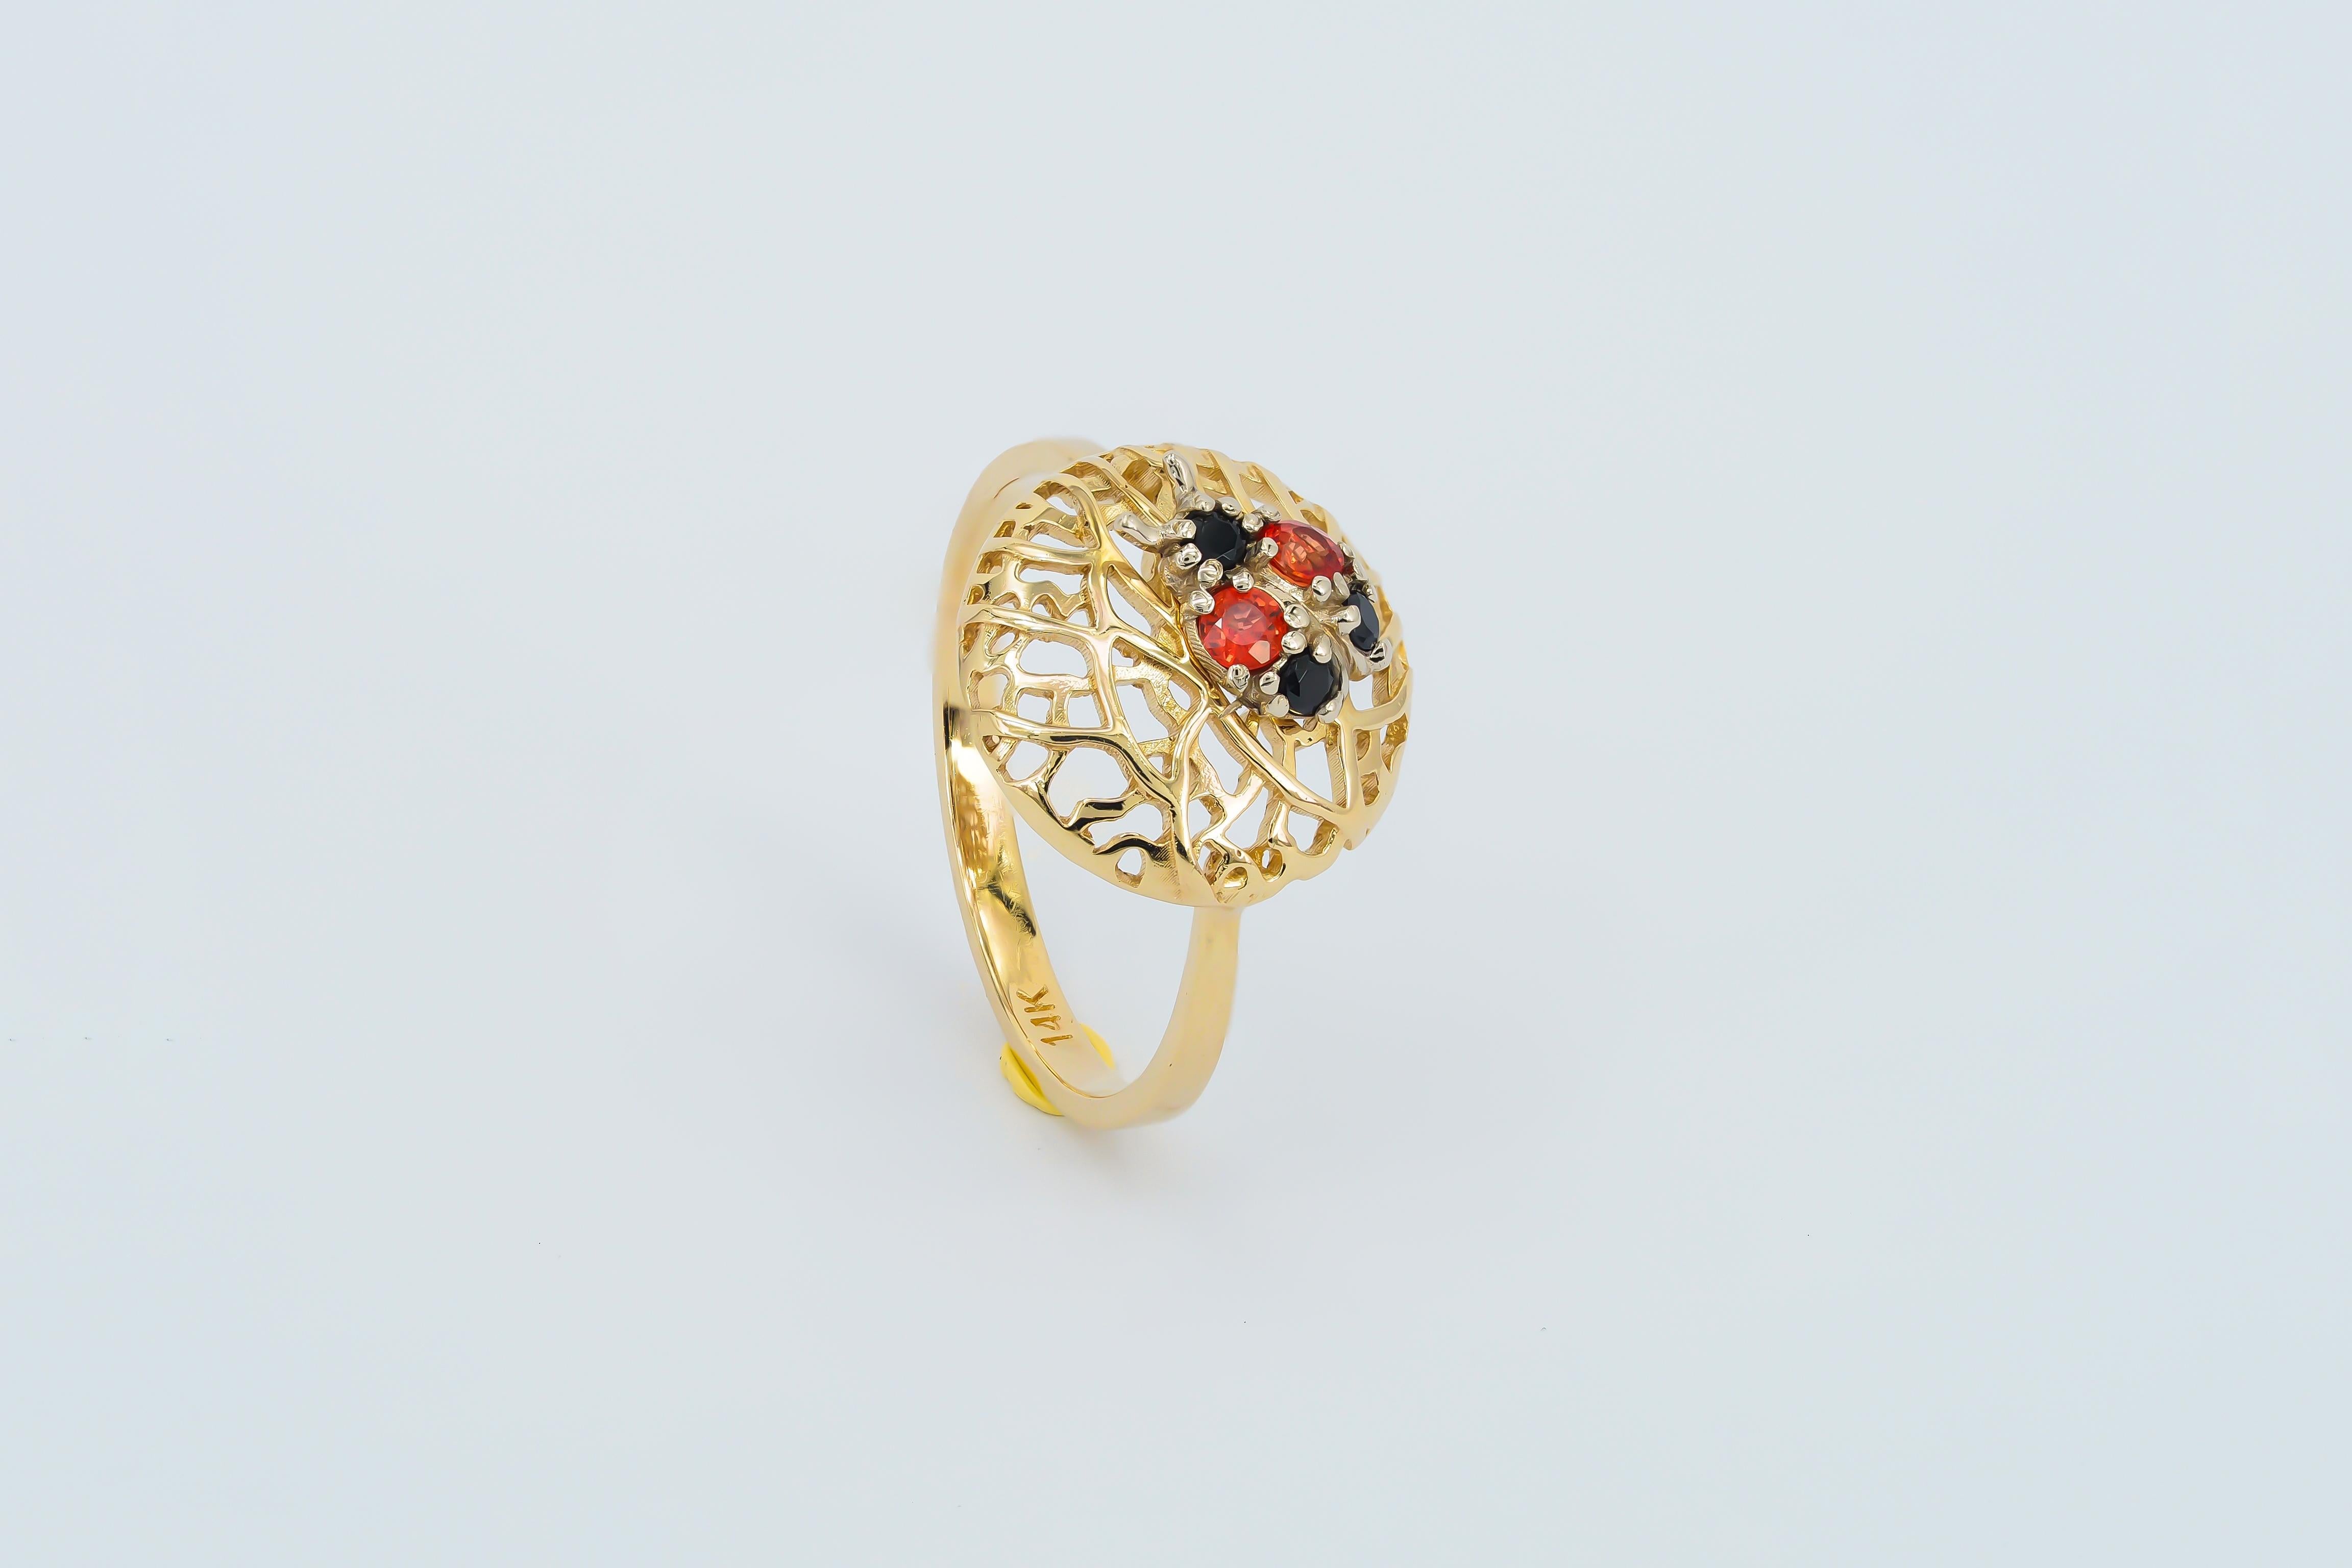 For Sale:  14 karat Gold Ring with Sapphires, Spinels. Ladybug gold Ring. 7